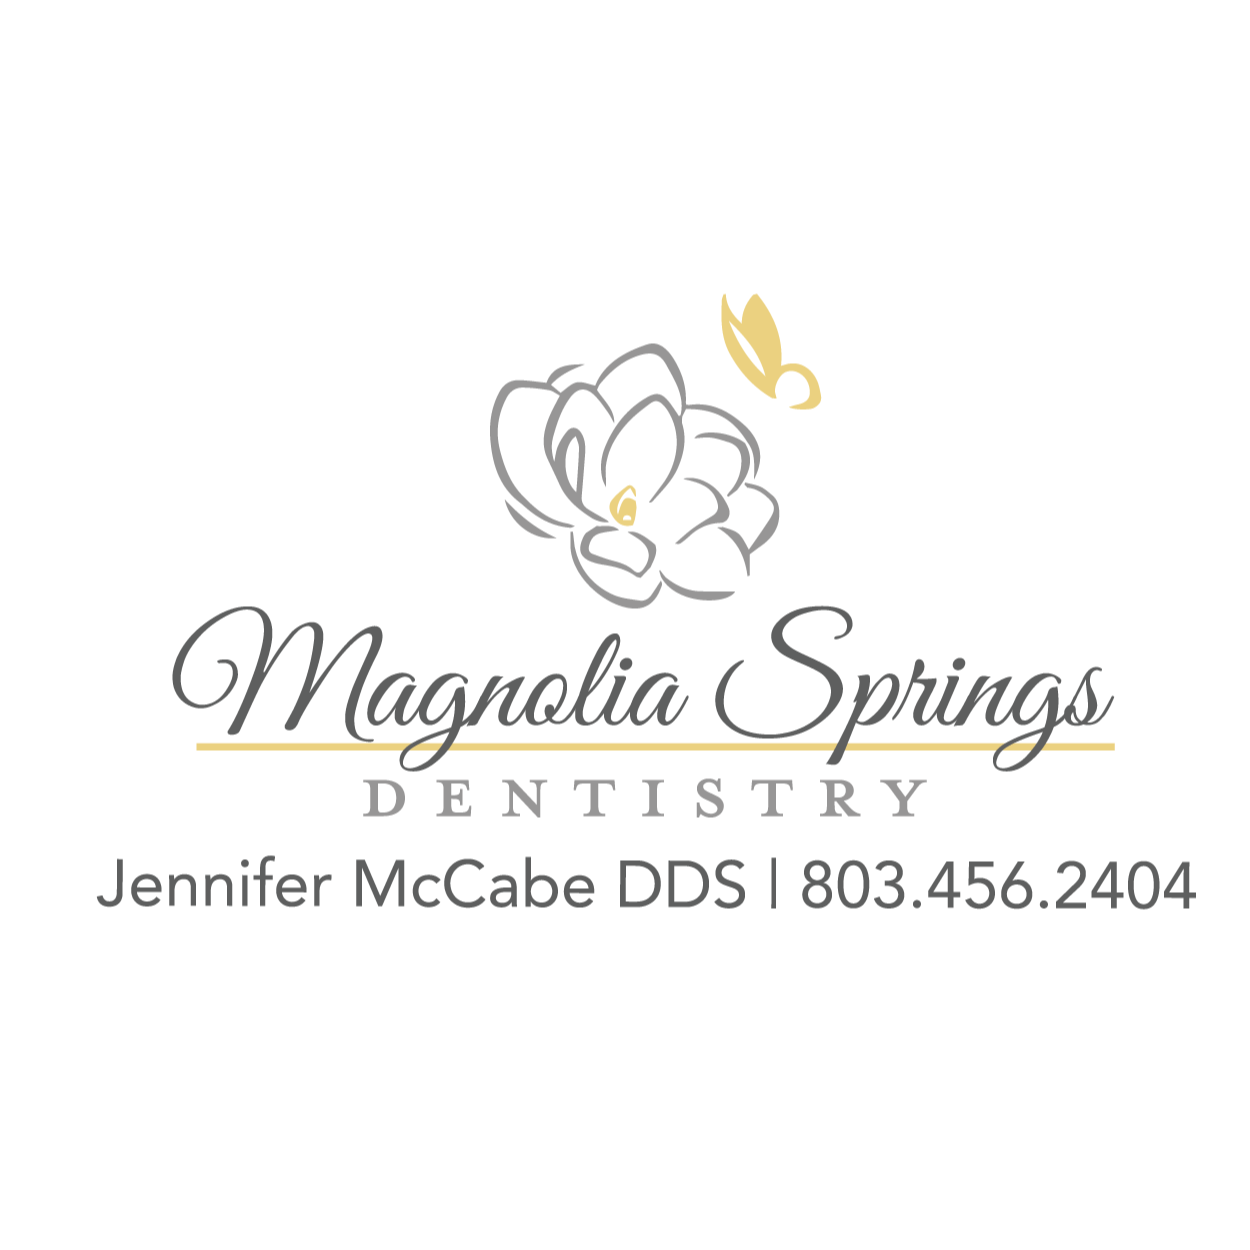 Magnolia Springs Dentistry